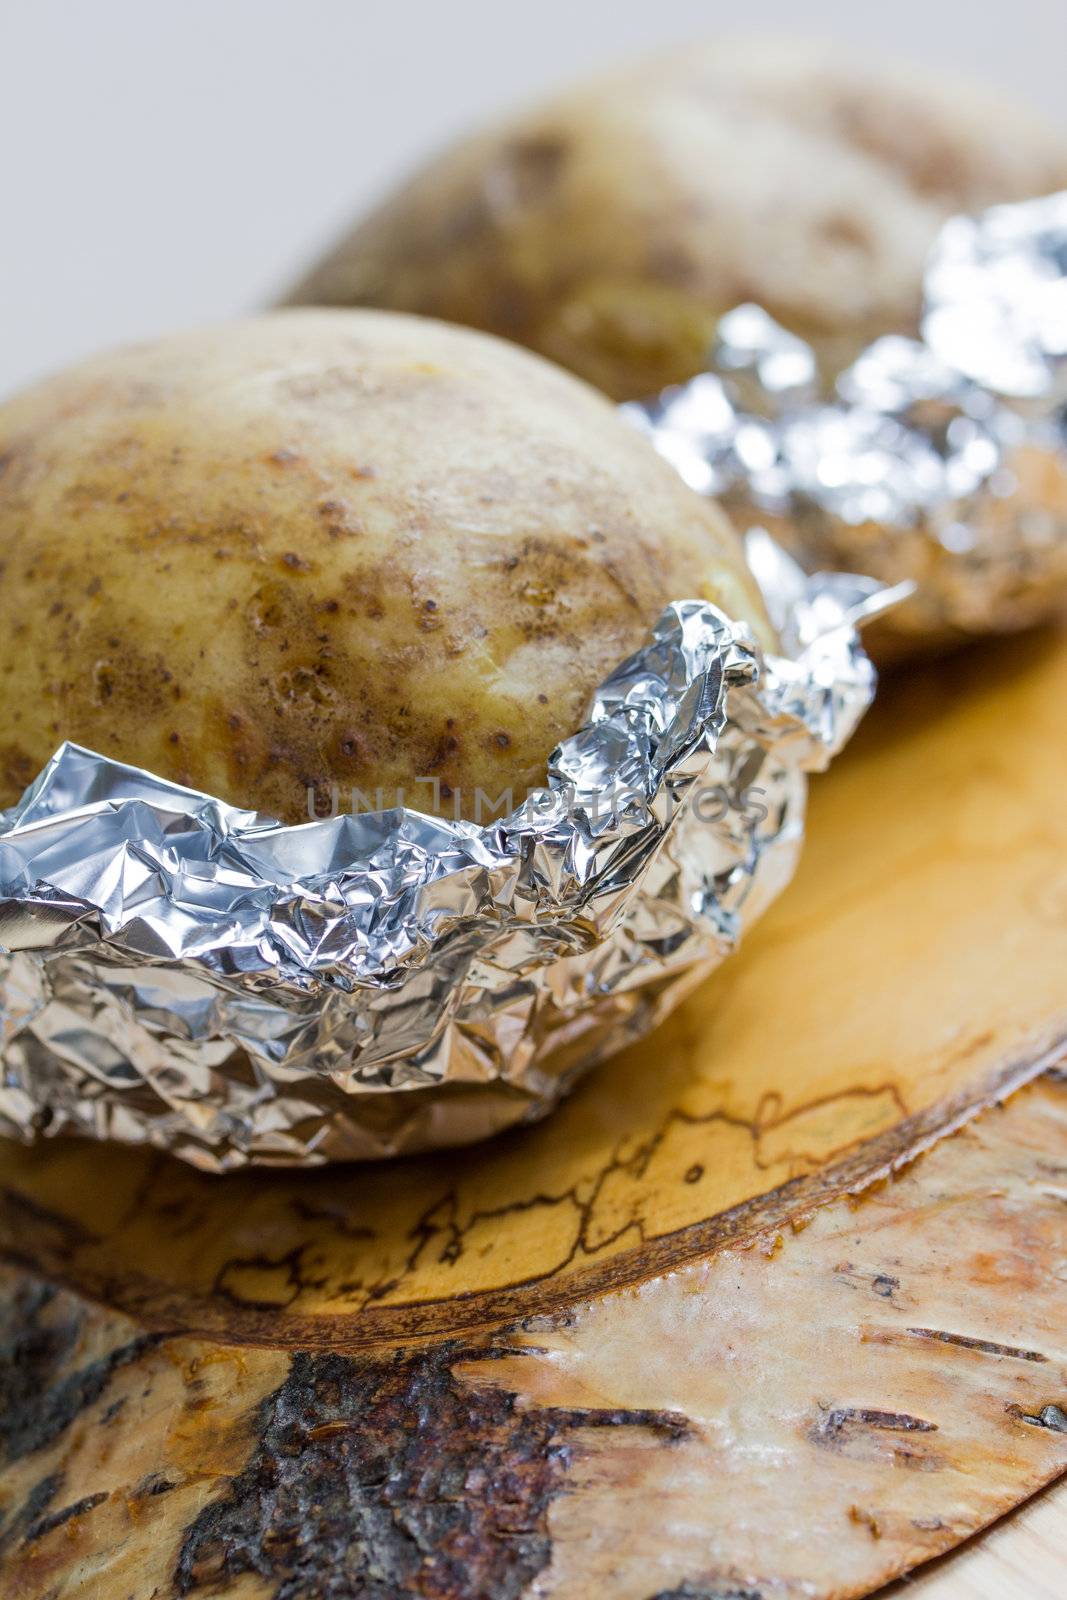 fresh baked potatoe with sour cream by Teka77